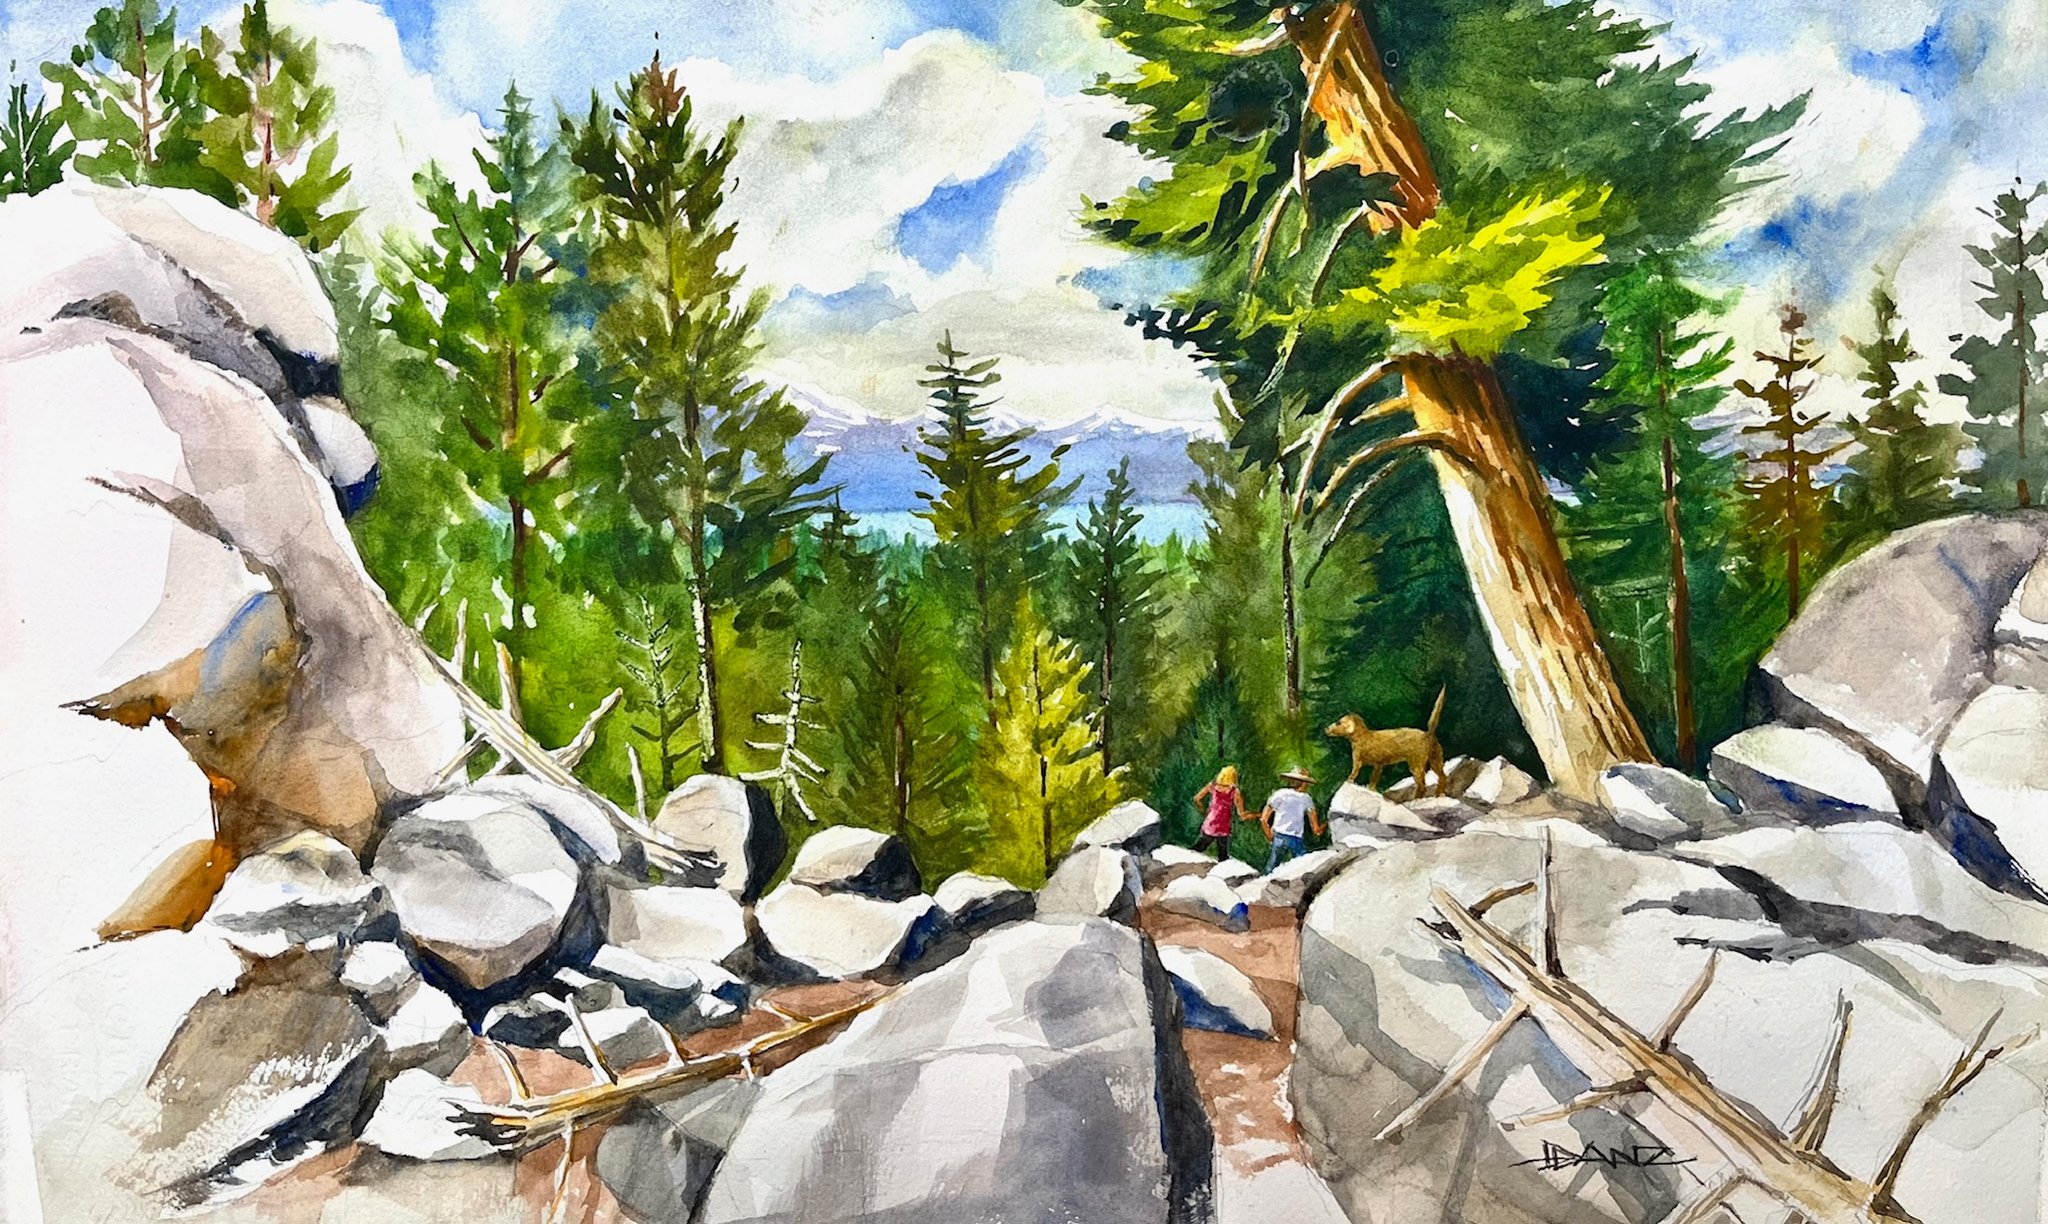 Danz_Tahoe Hike Painting_web.JPG